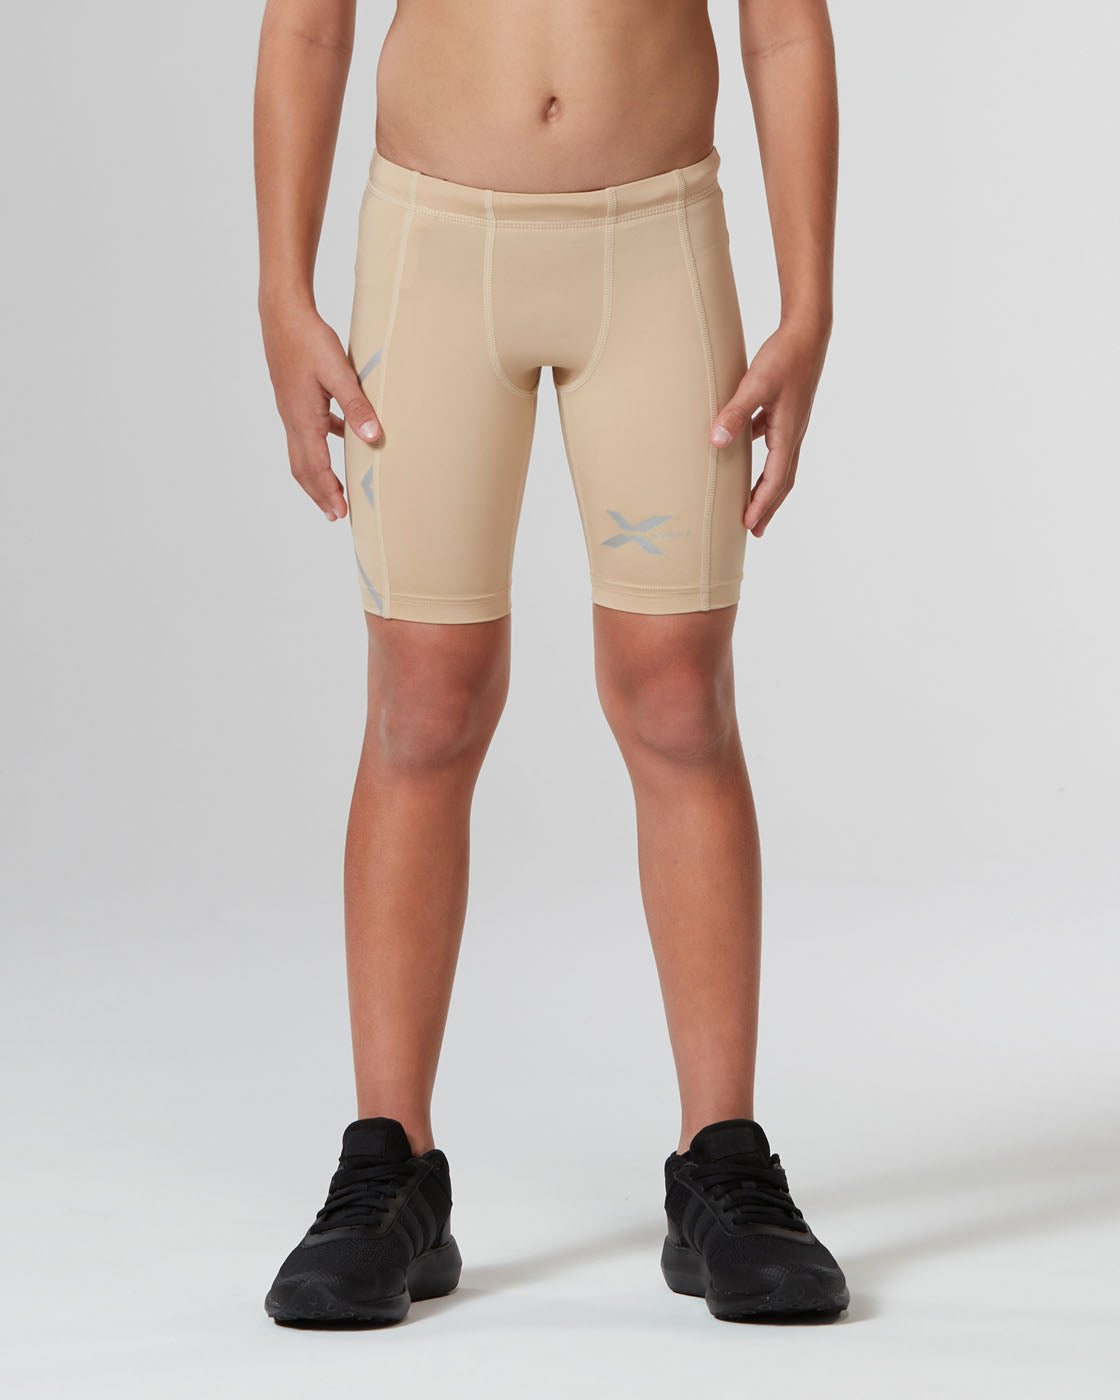 Nike Kids Core Compression Shorts - White/Cool Grey